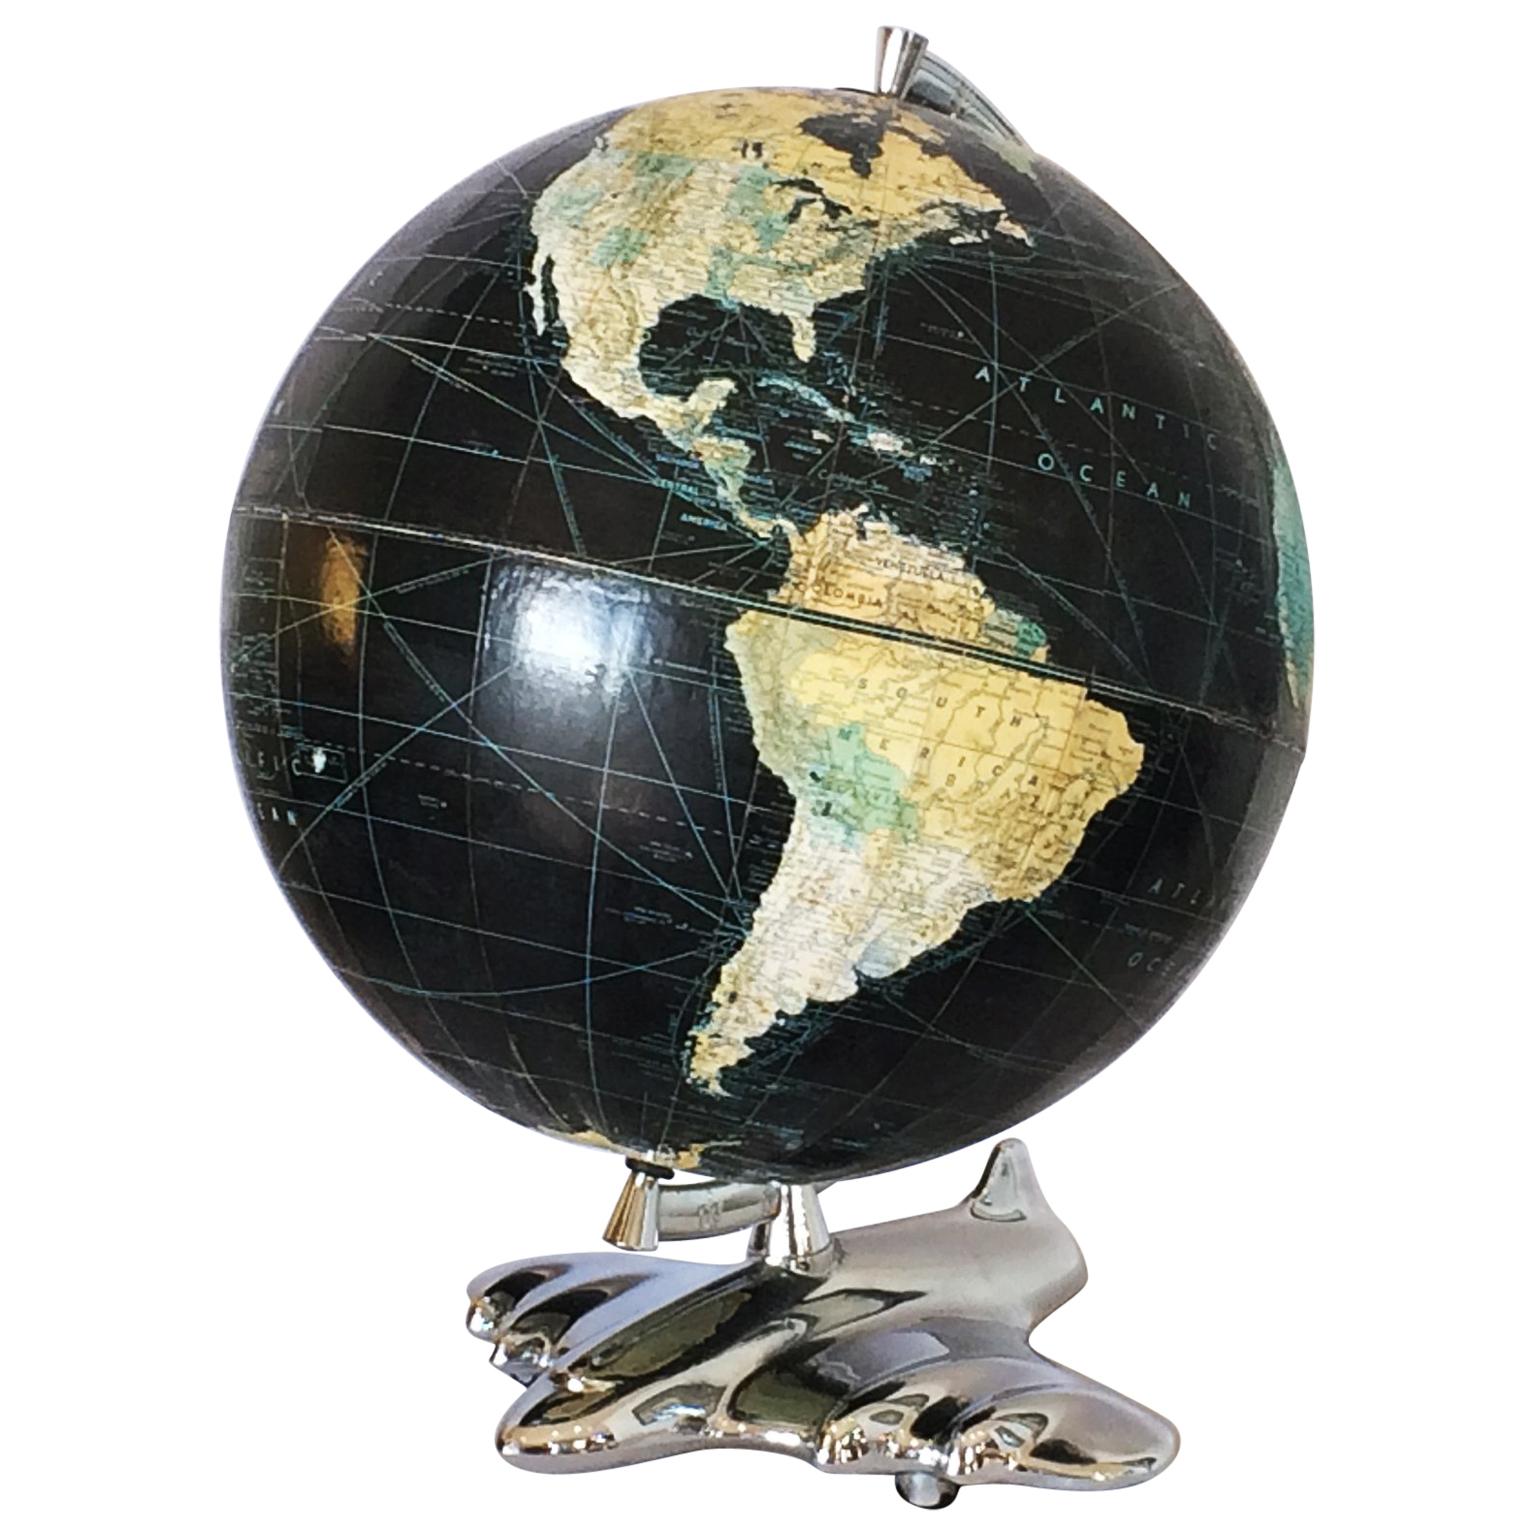 Rare Art Deco Black Oceans Airplane World Globe by Weber Costello